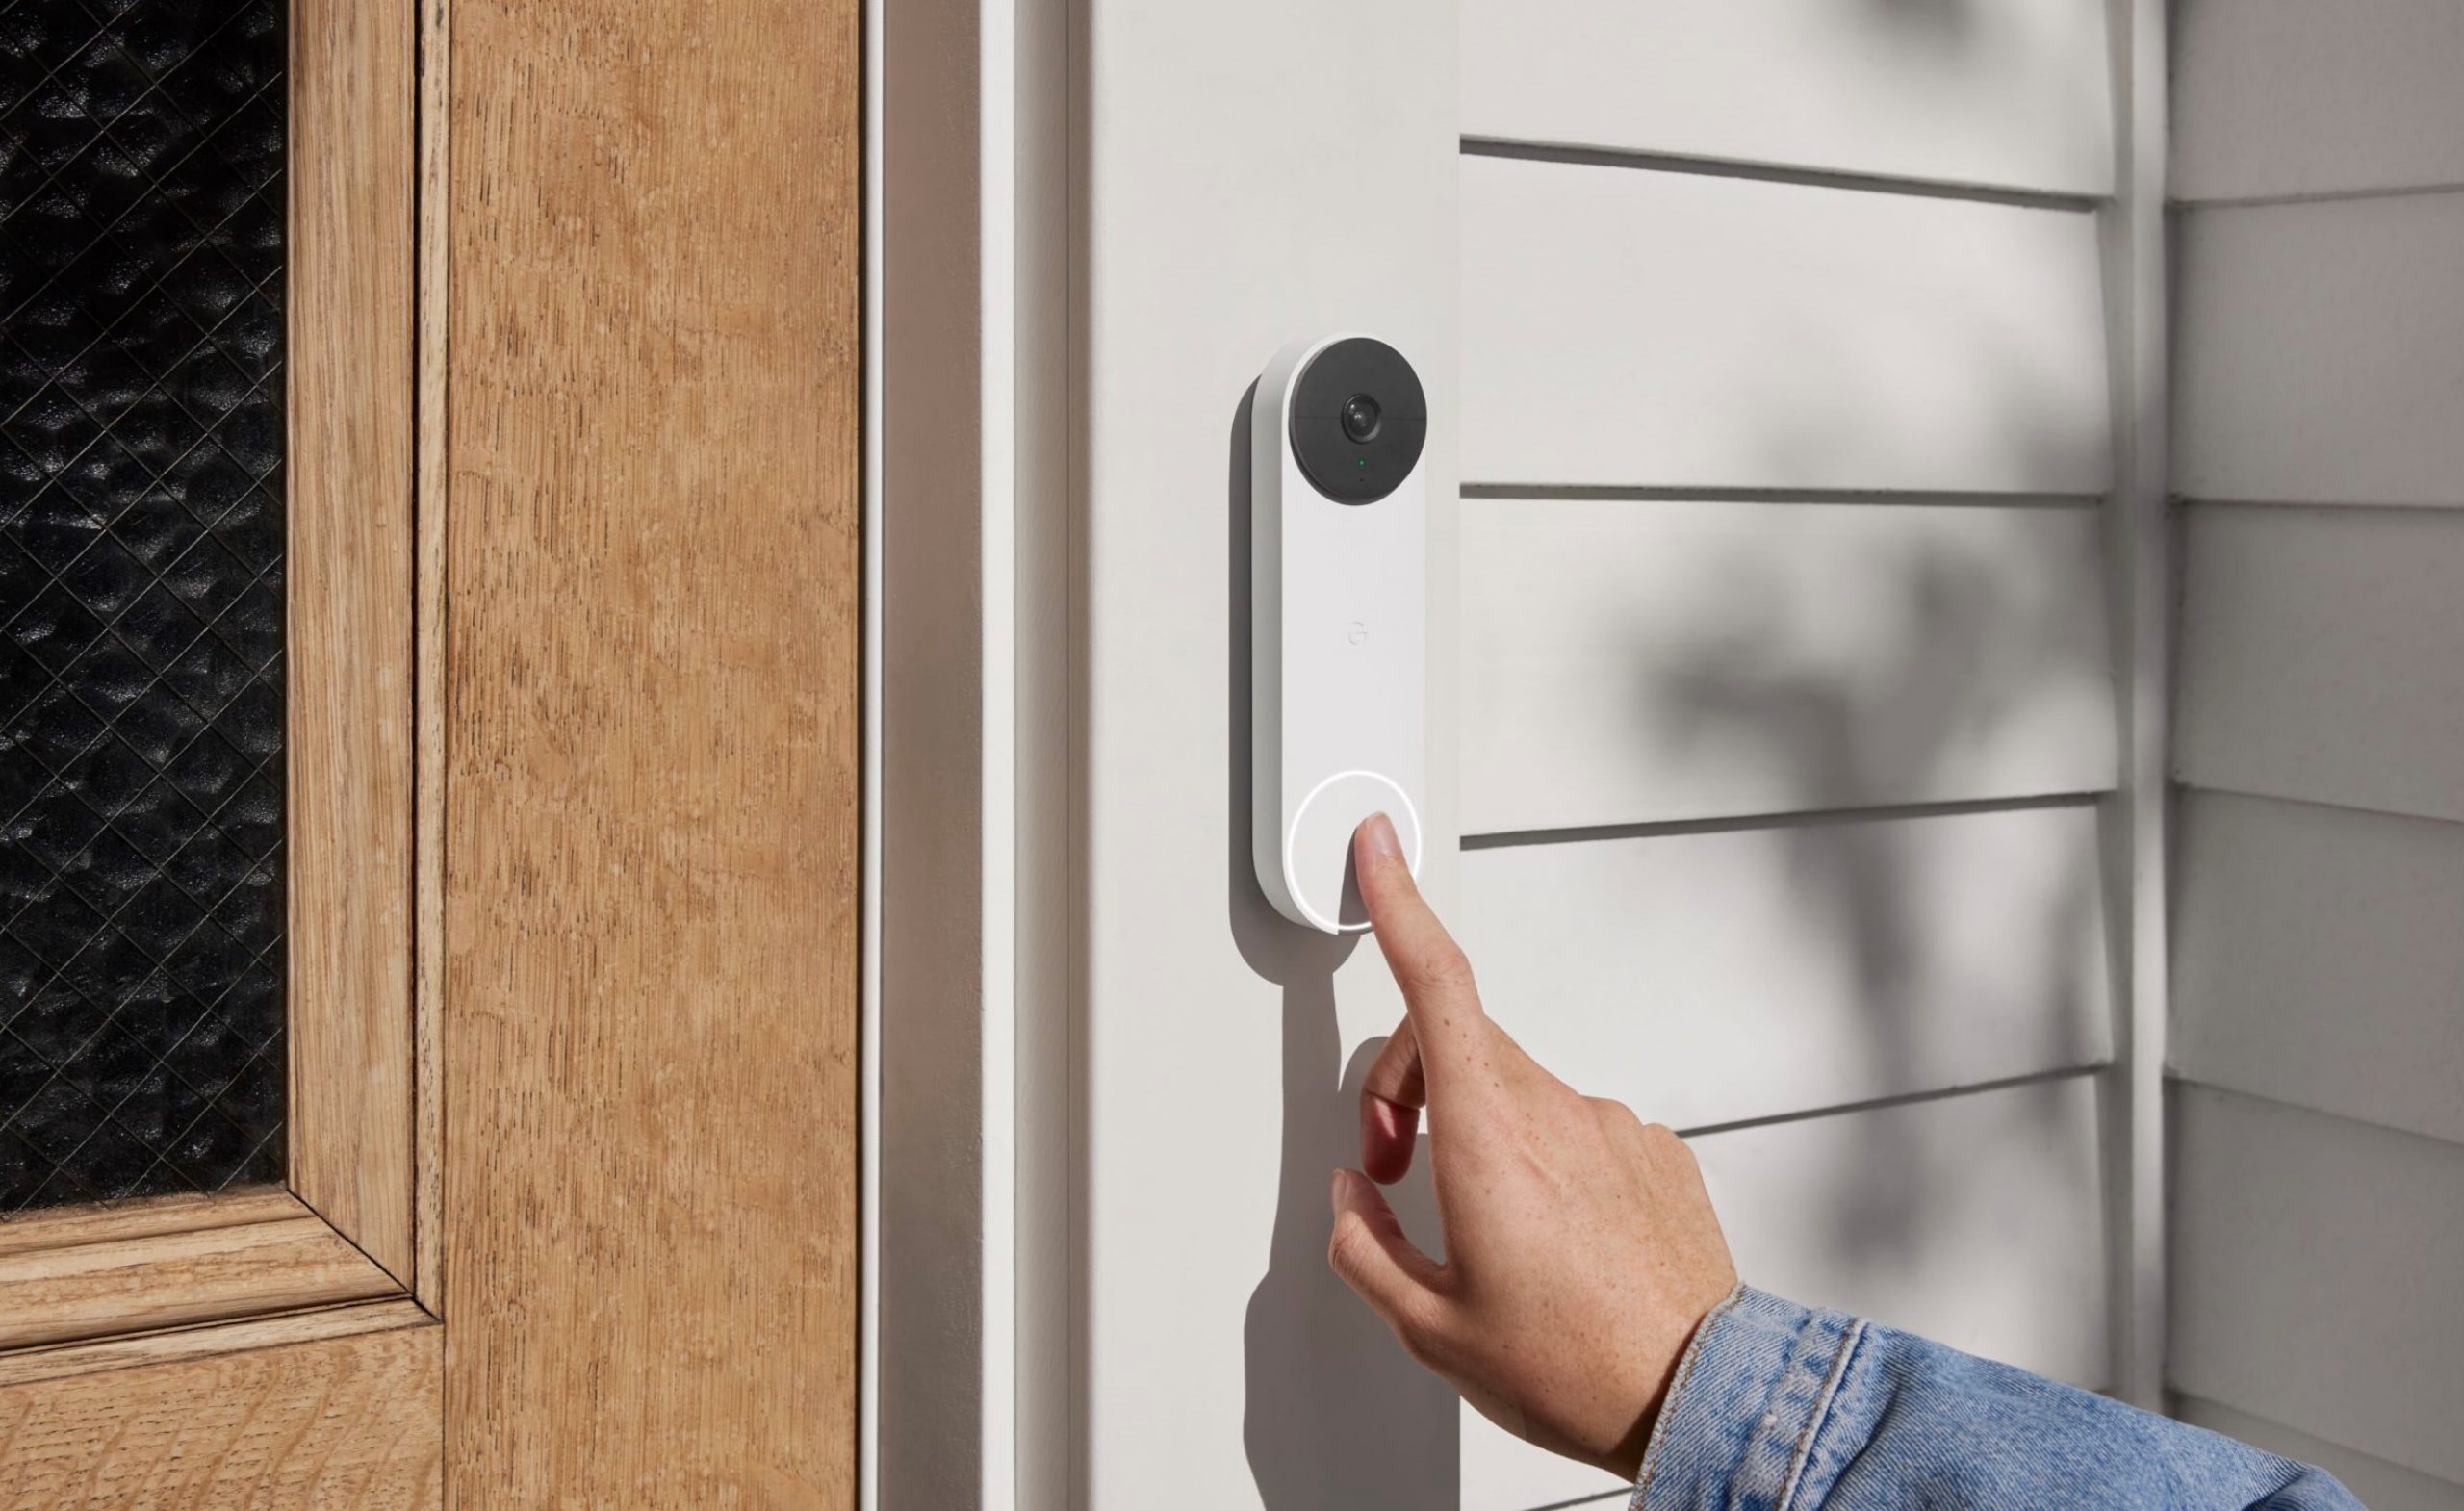 Google Nest Doorbell (Battery) – friend or foe (security review)